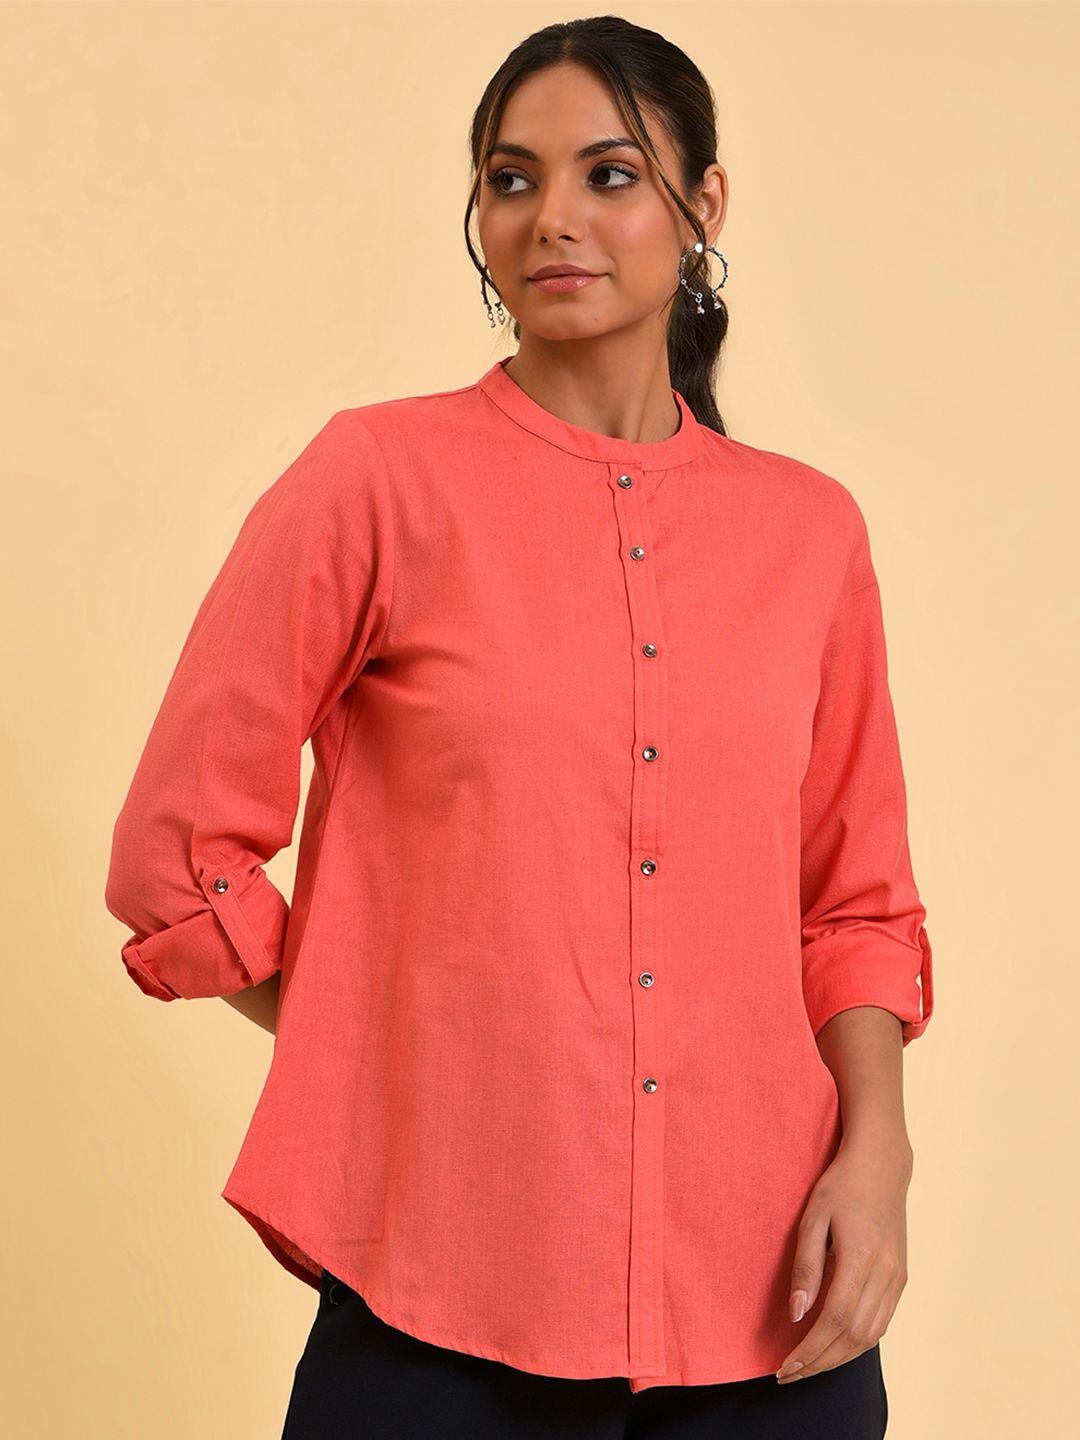 w mandarin collar roll-up sleeves cotton shirt style top